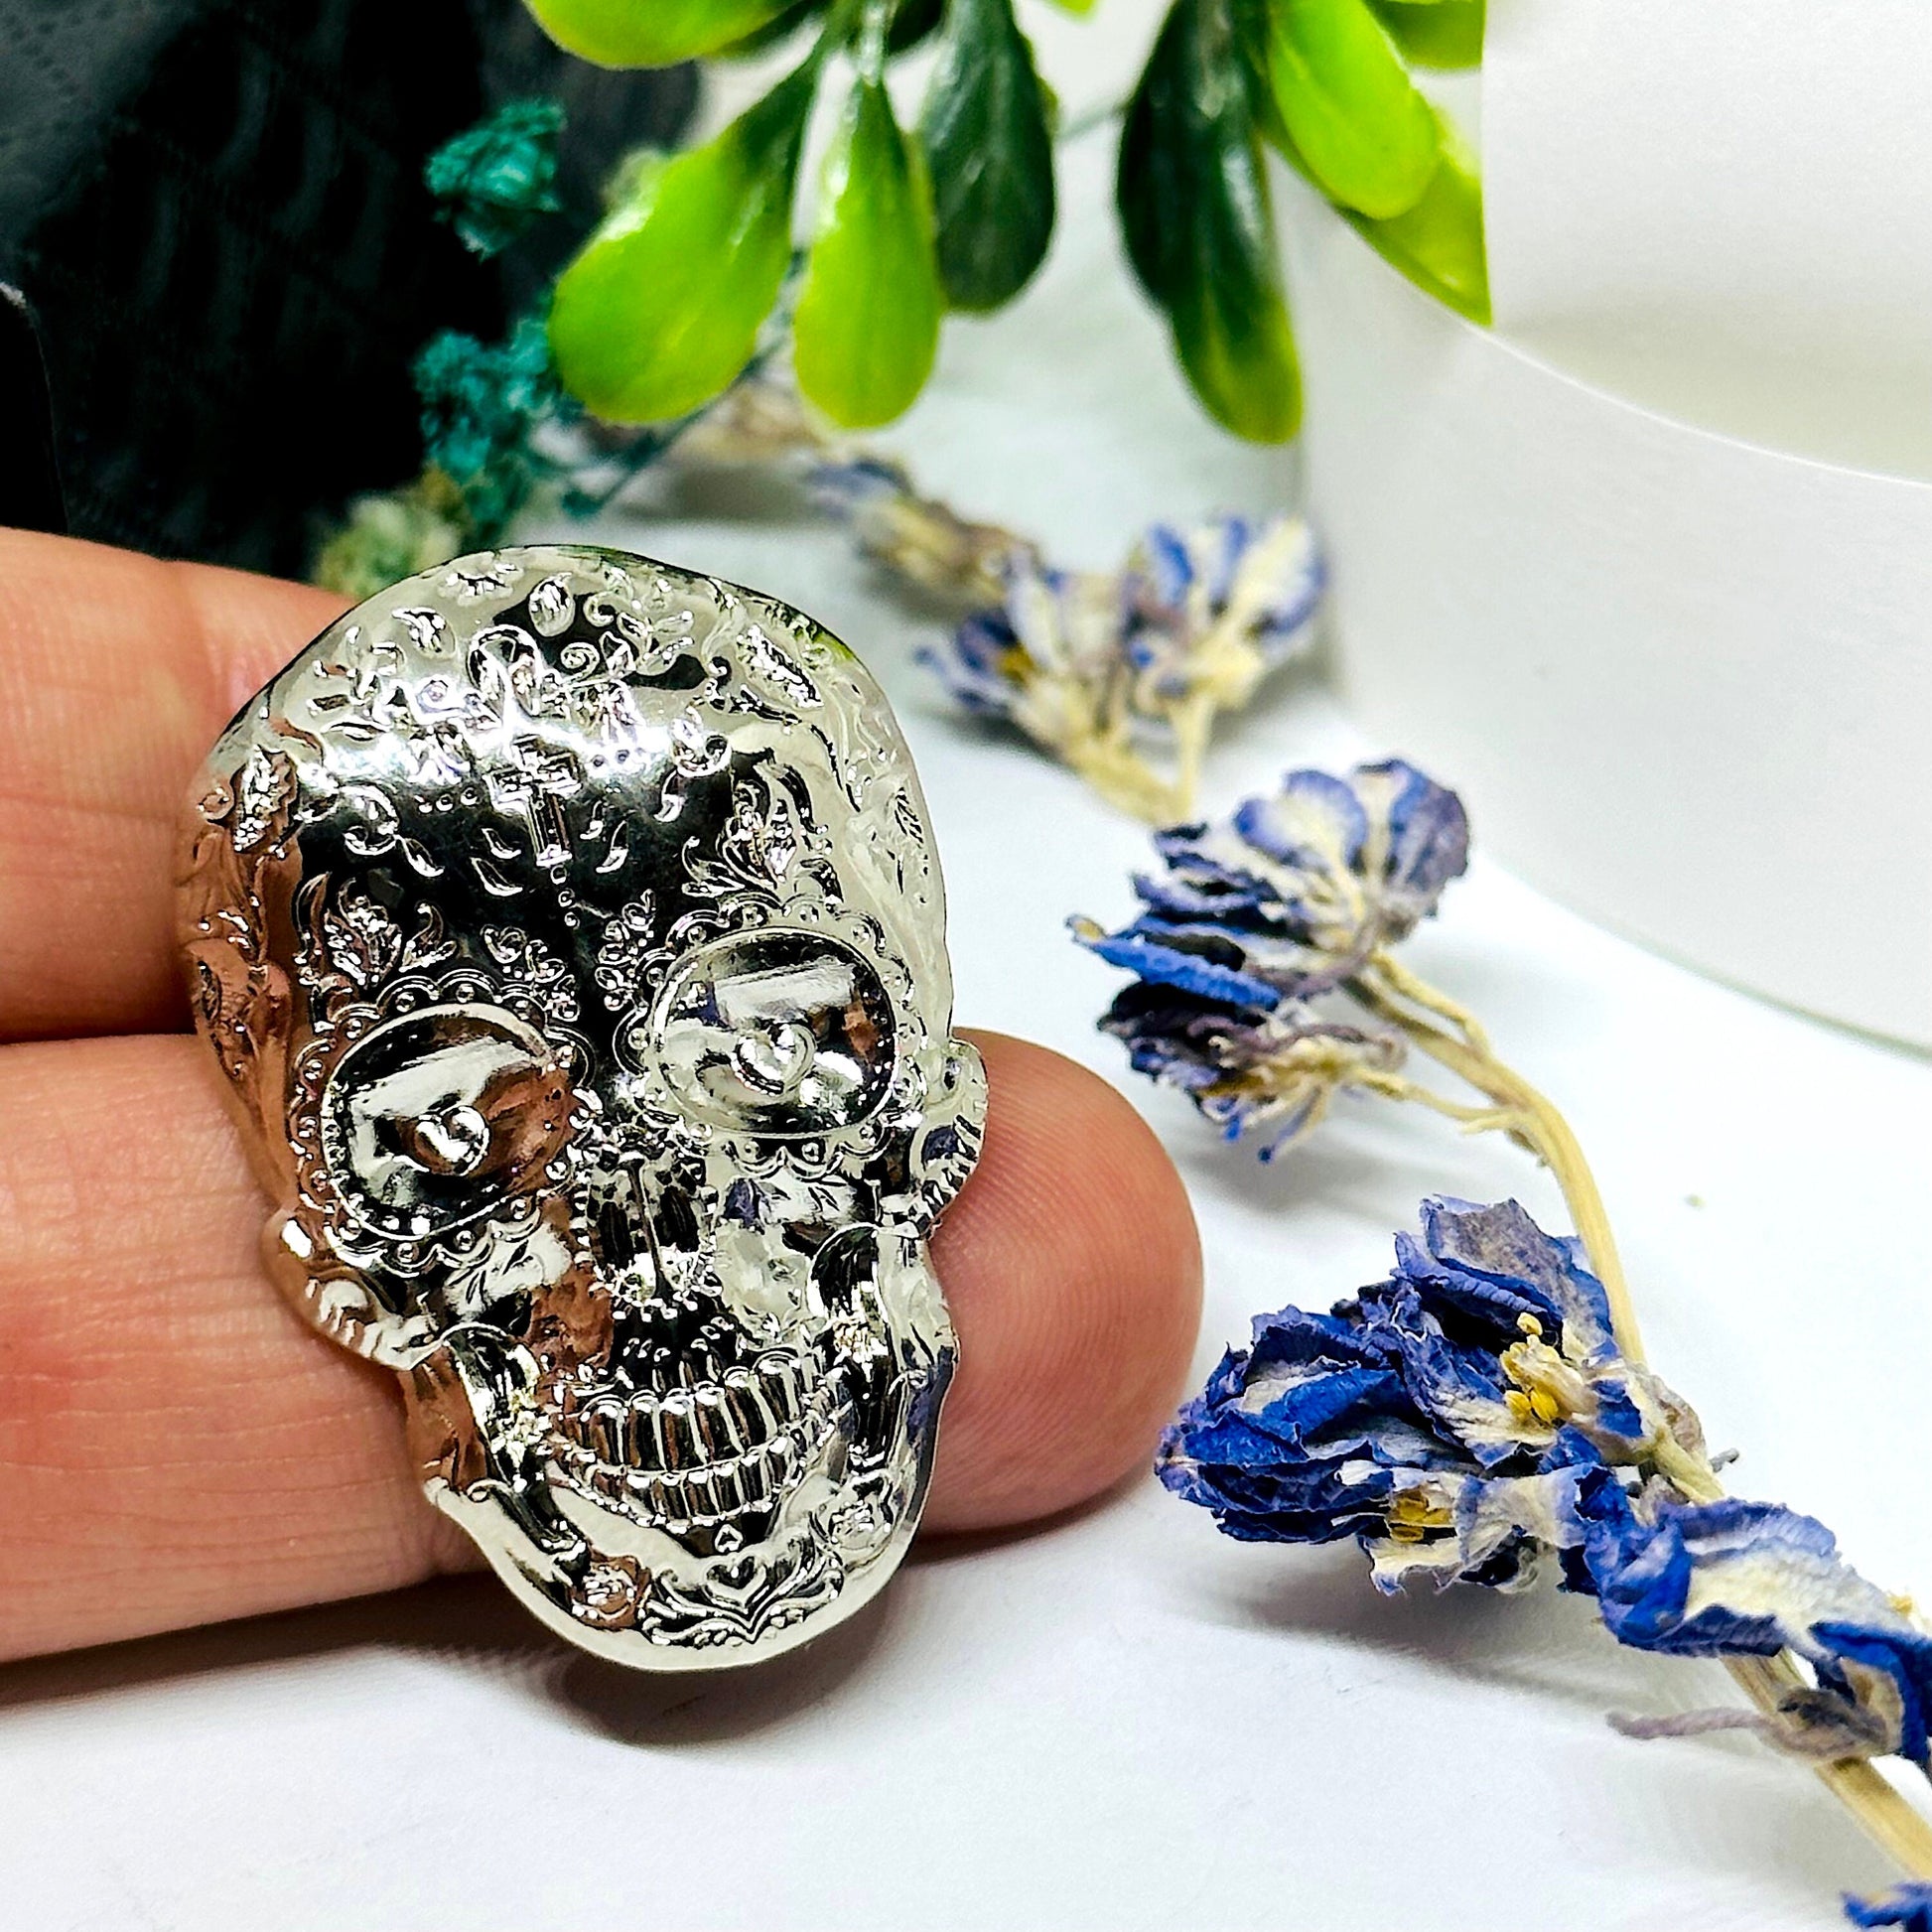 Mexican Sugar Skull Pin Brooch Silver Chrome Artfully Carved Design Pin Back Button Unisex Fashion Day of the Dead Jewelry Calavera Broche